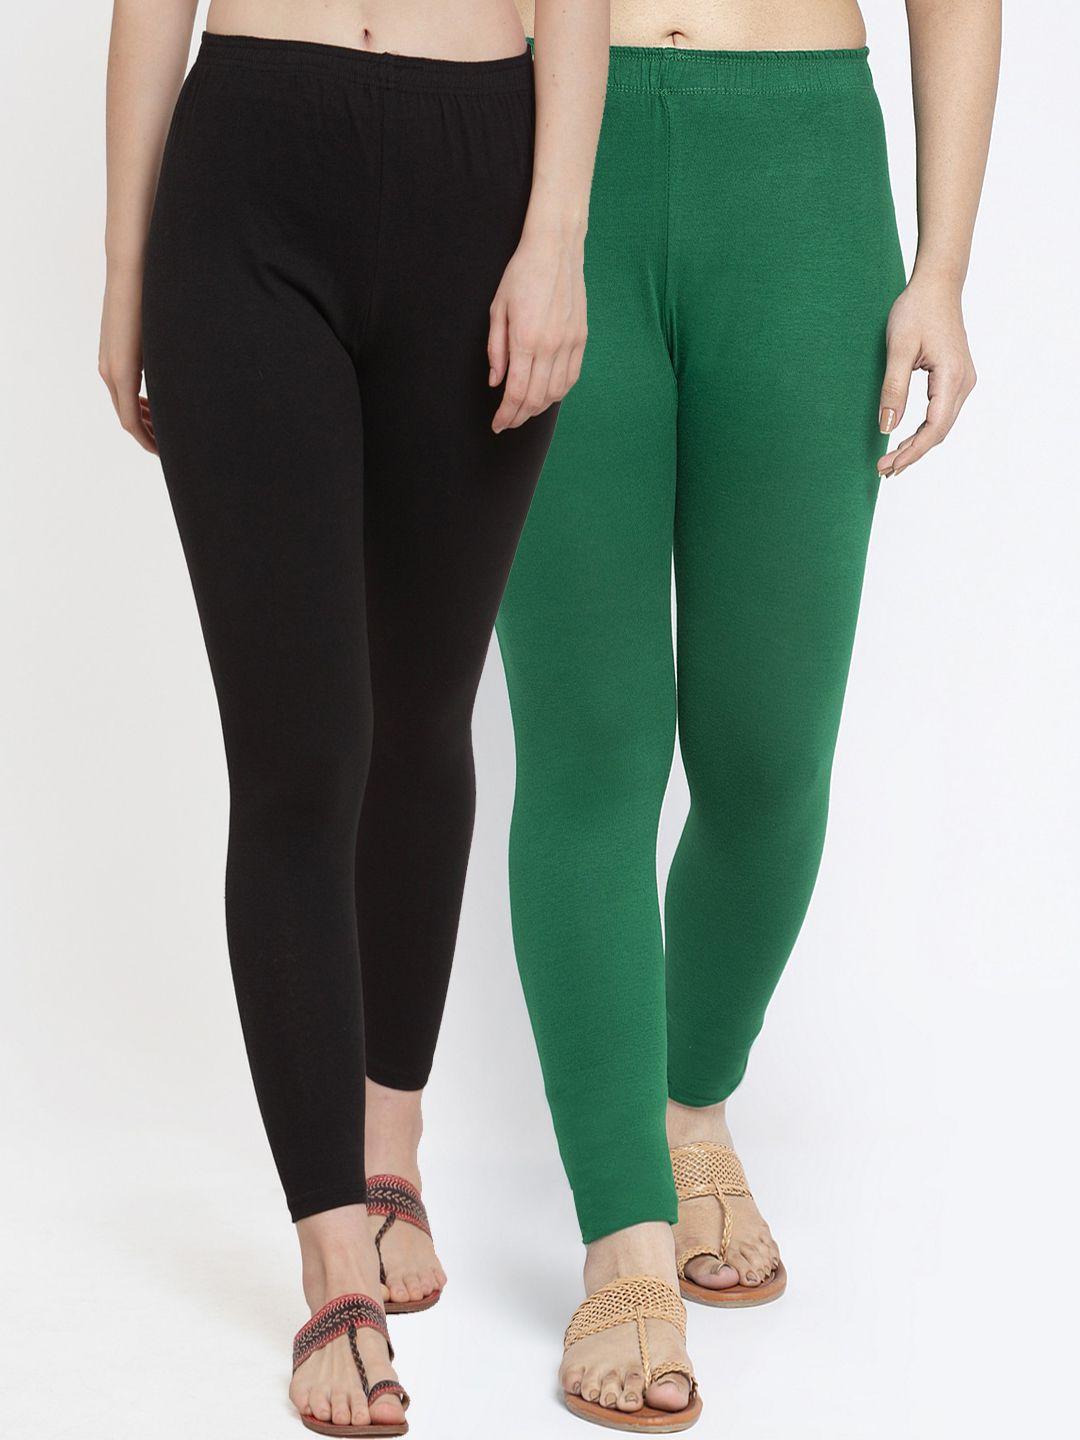 gracit-women-pack-of-2-black-&-green-solid-ankle-length-cotton-lycra-leggings